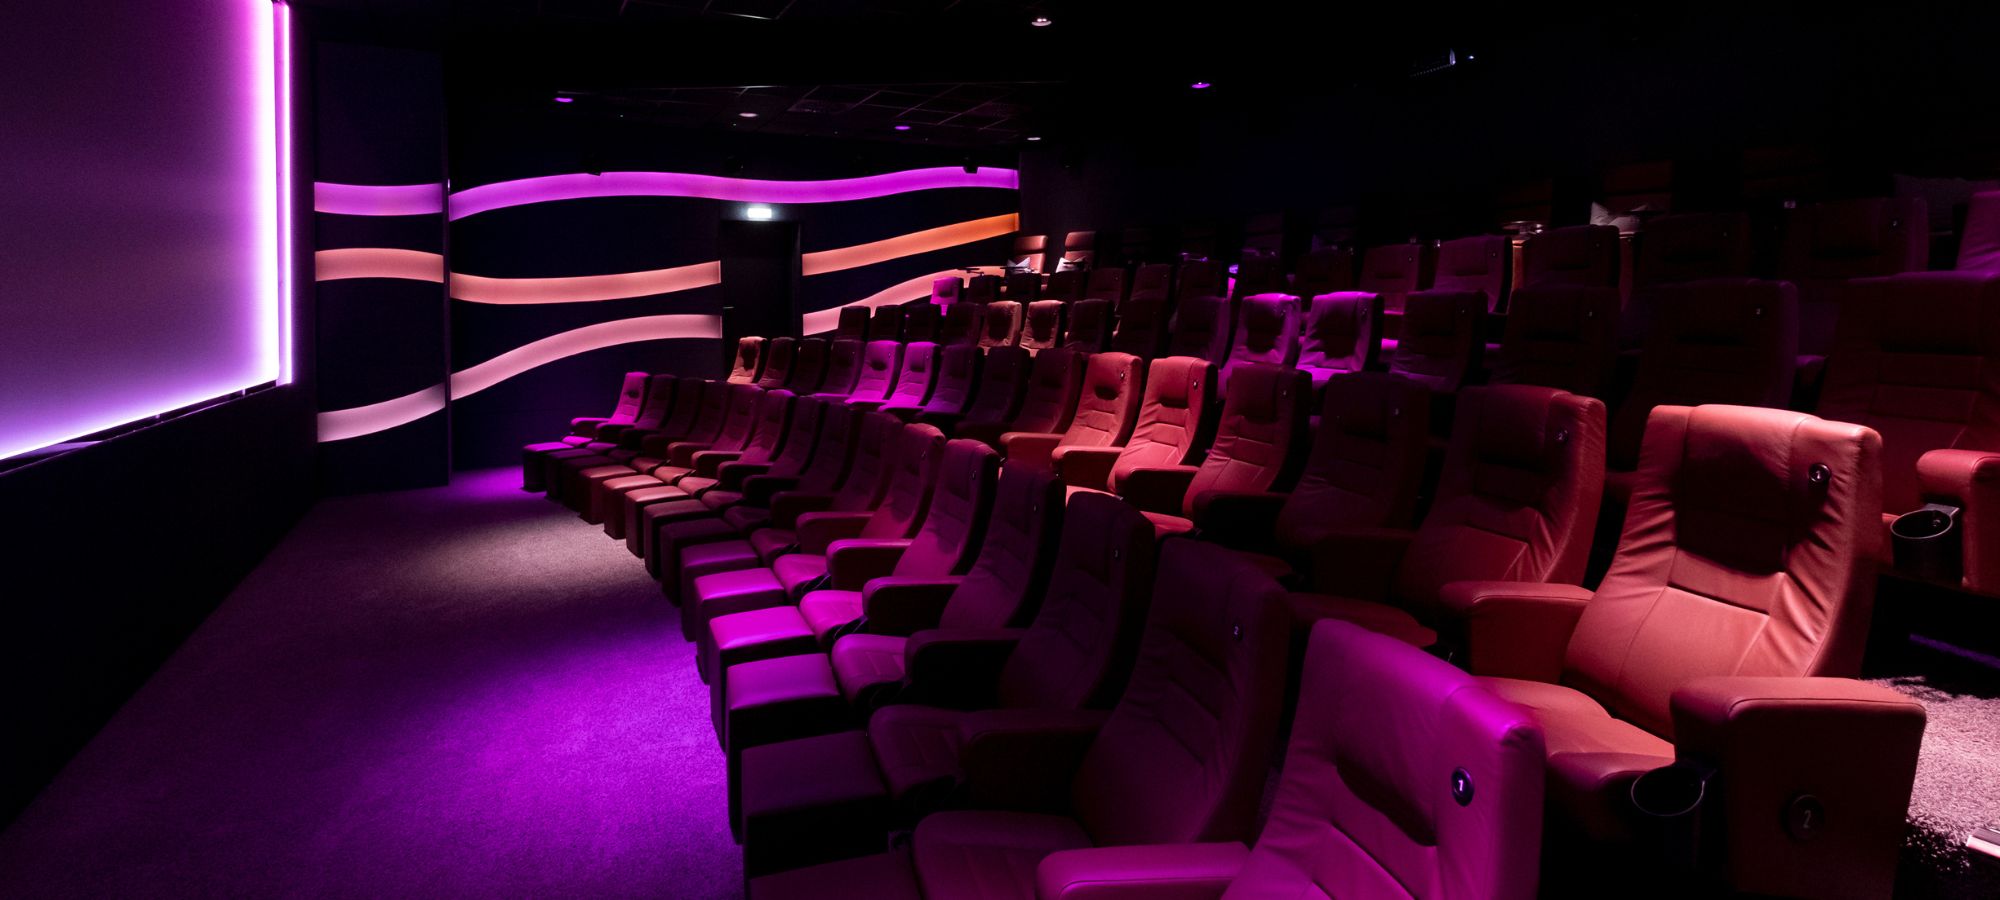 Das Cineplex Kino in Passau